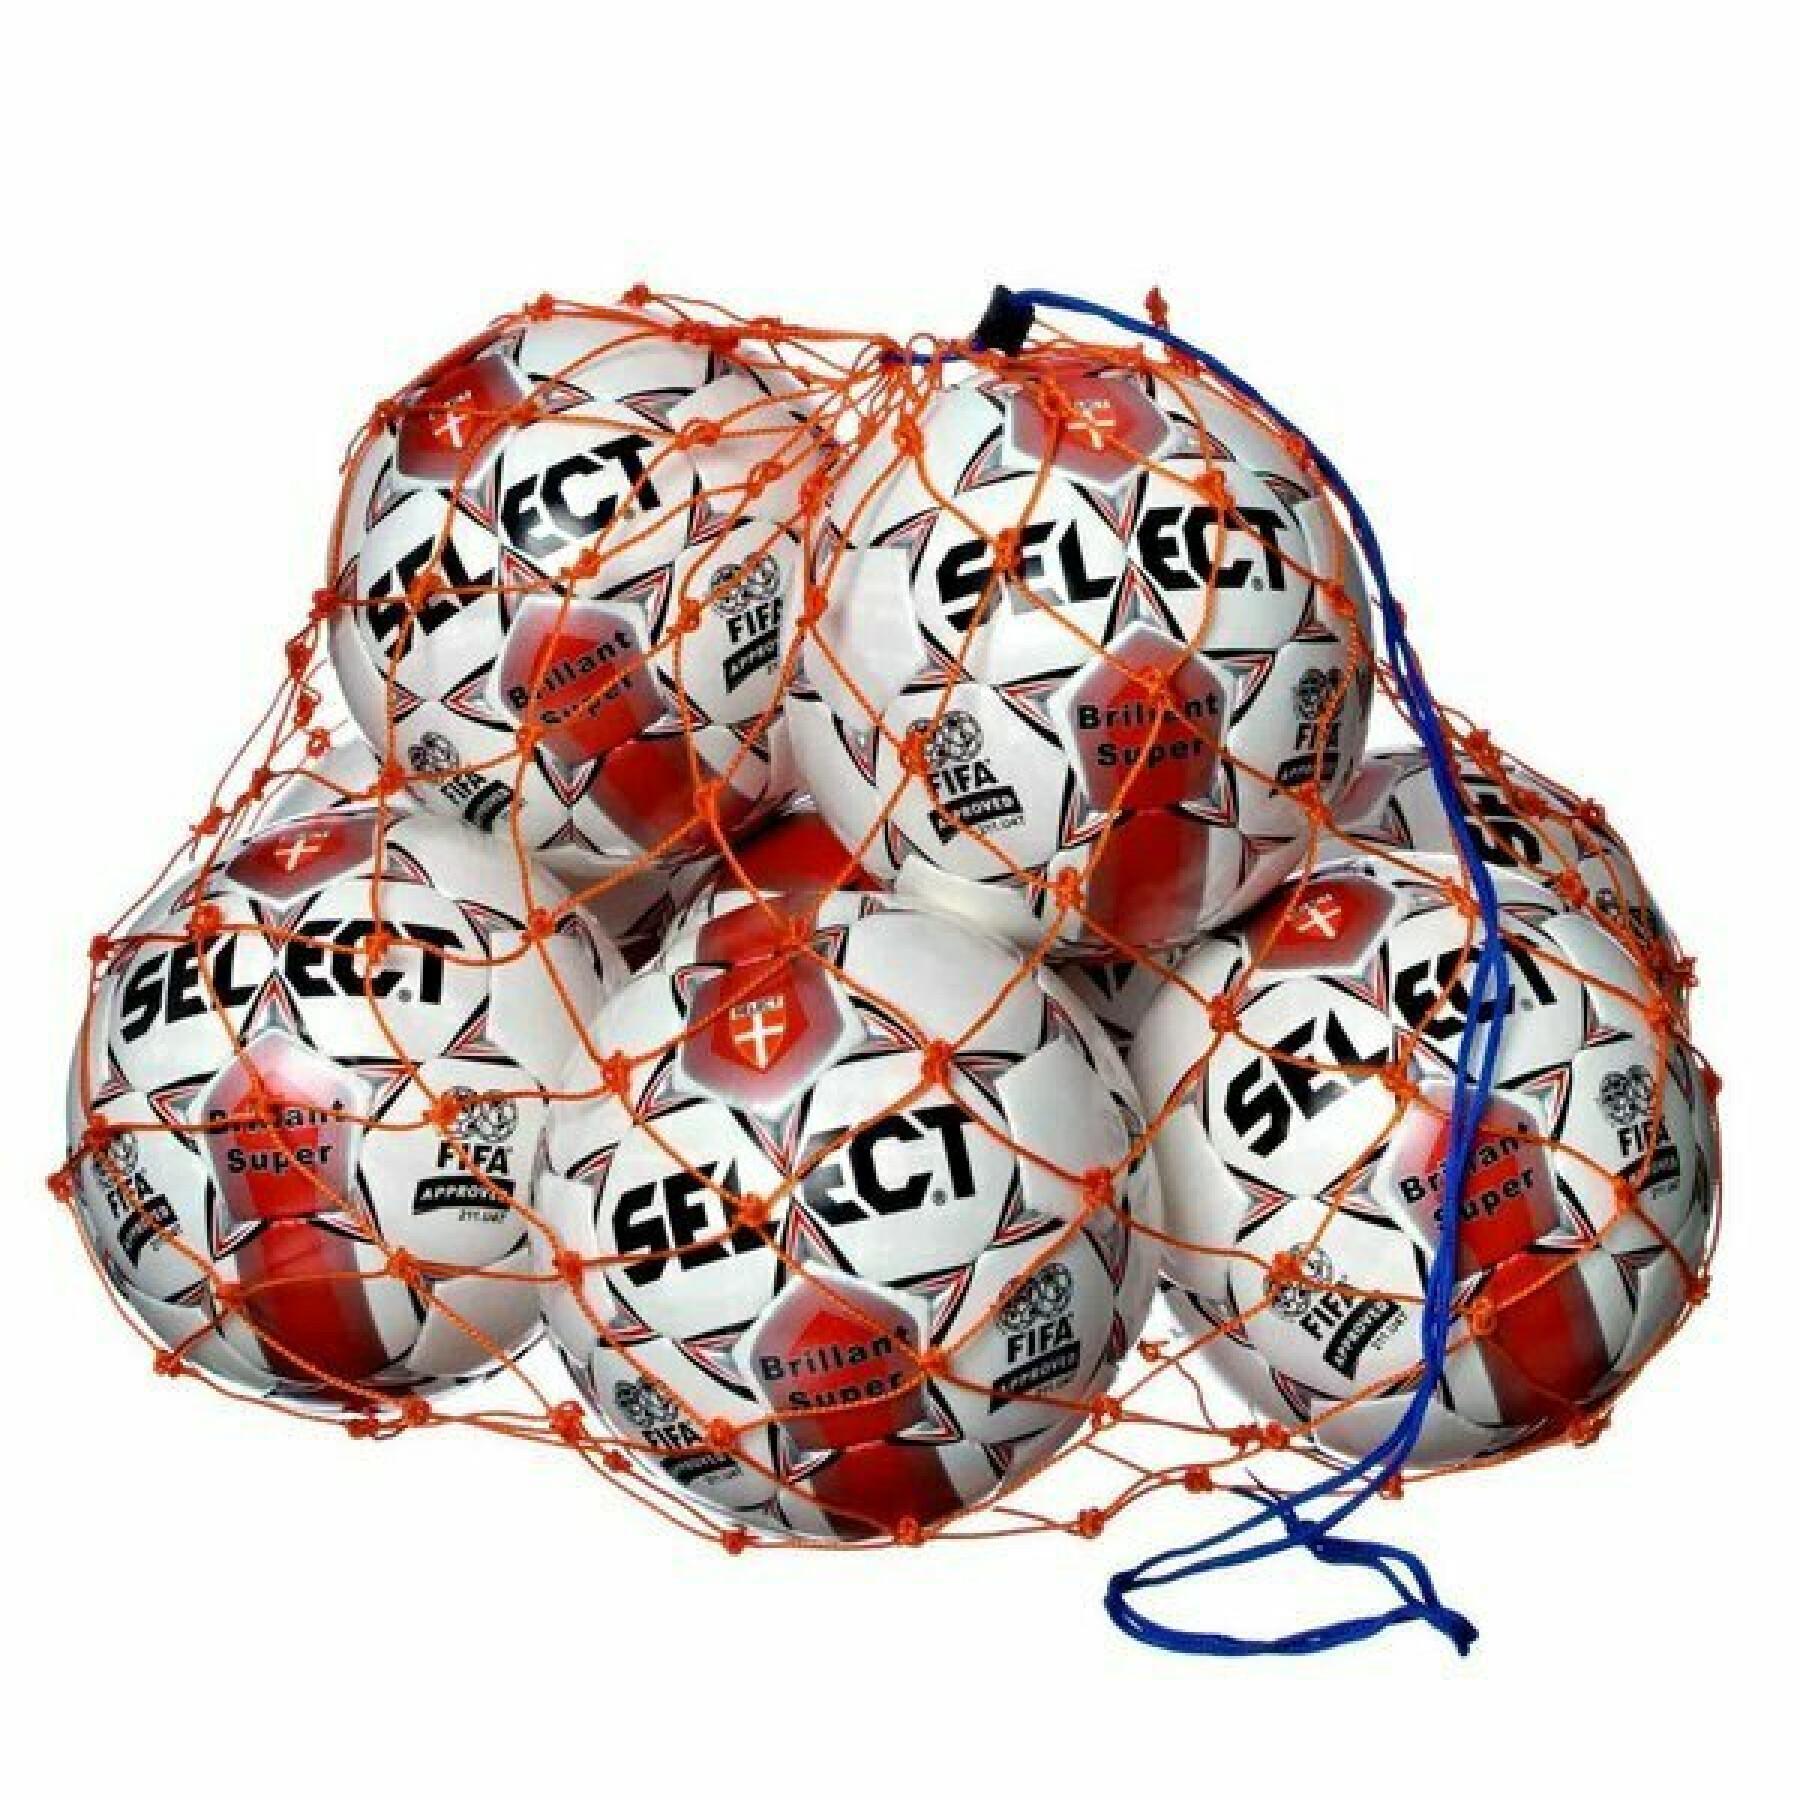 Ballonnetz Select / 14 - 16 ballons